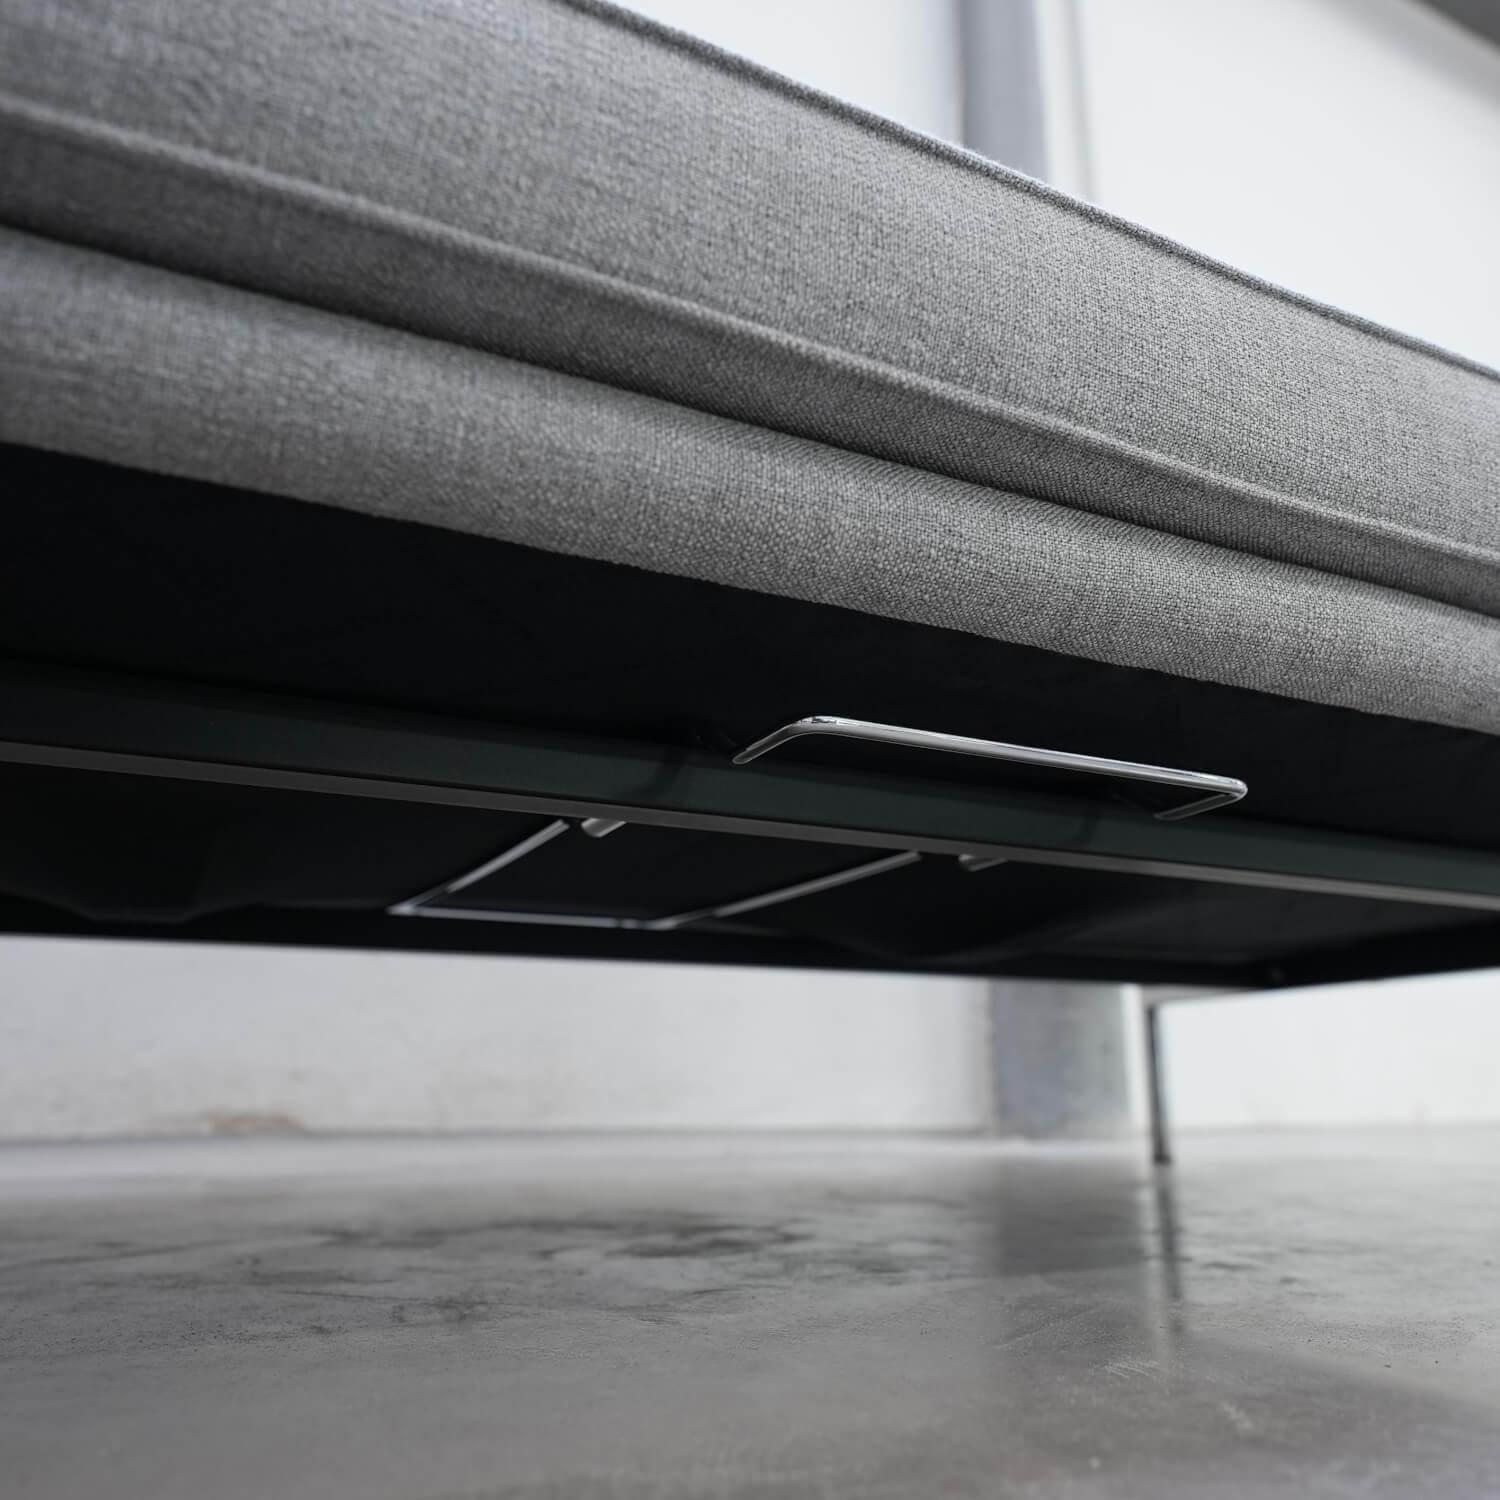 Sofa Living Platform 400 Bezug Stoff Gaia 7891 Platin Grau Gestell Stahl Hochglanz Verchromt